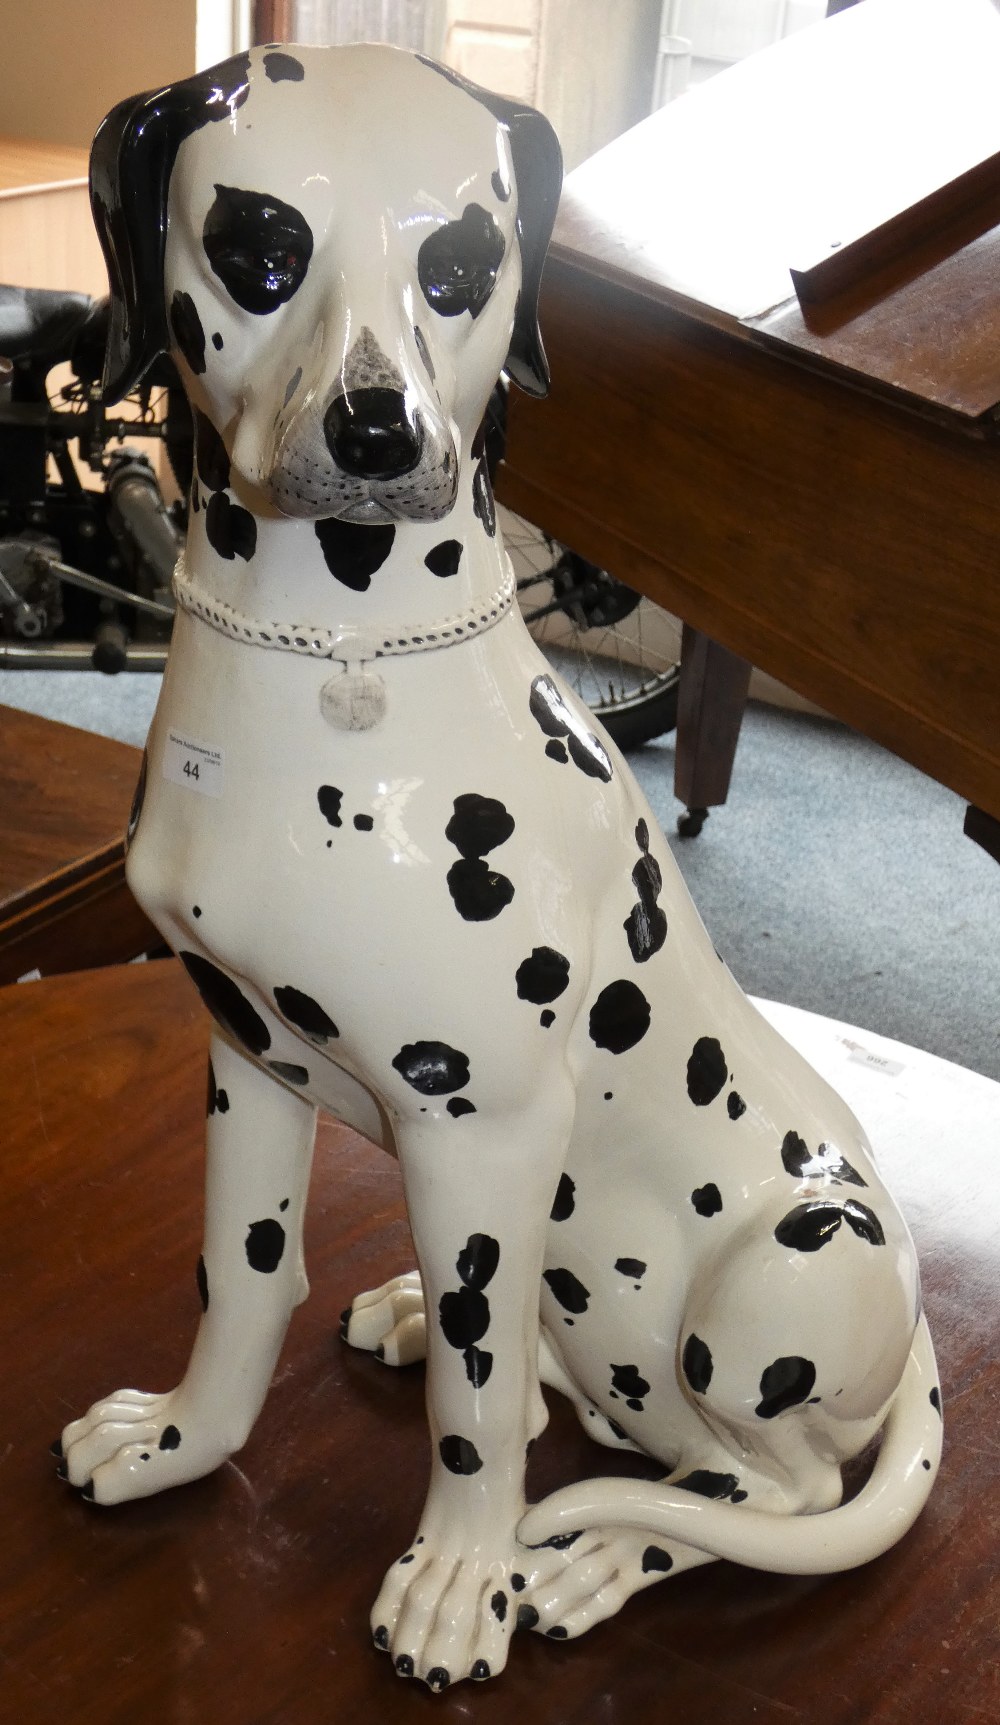 A large ceramic model of a dalmatian dog, 68 cm tall